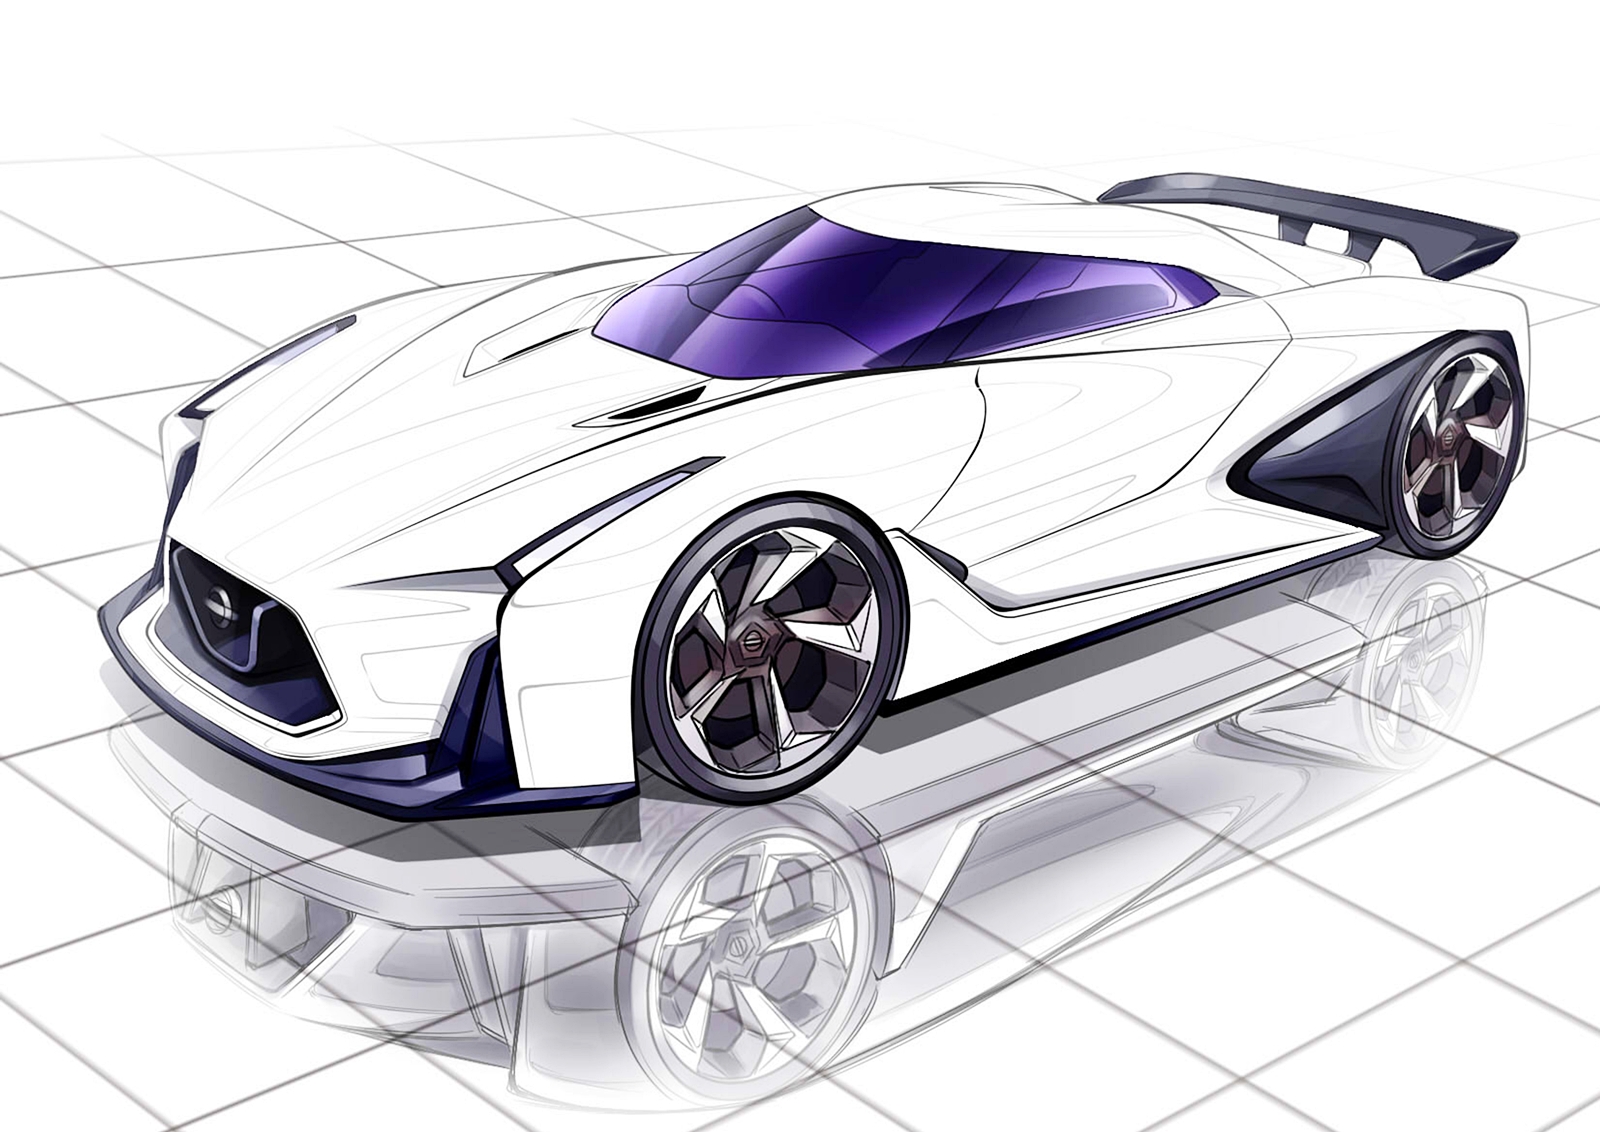  Nissan Concept 2020 Vision GT